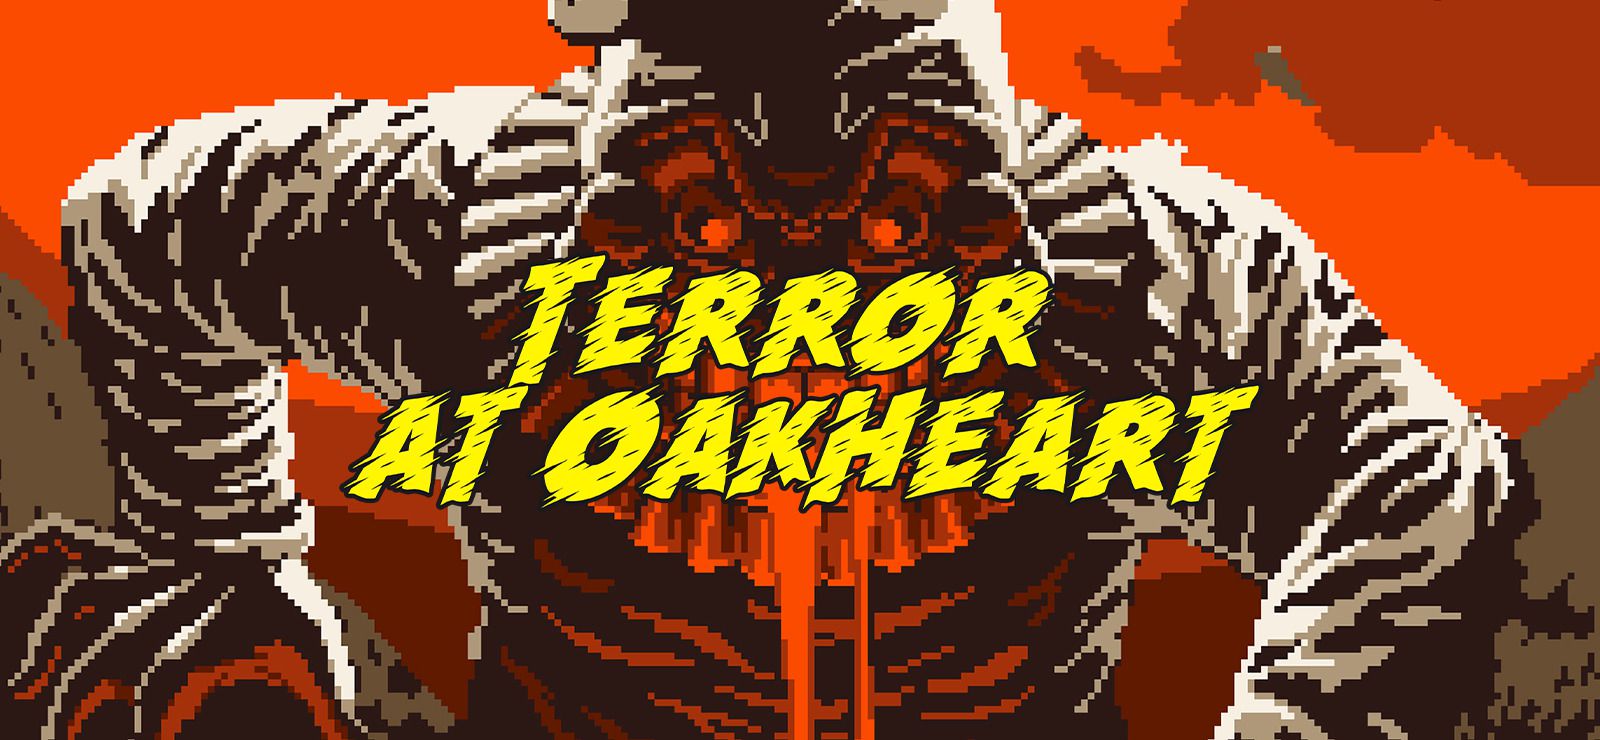 Terror At Oakheart: Ein düsteres Abenteuer wartet